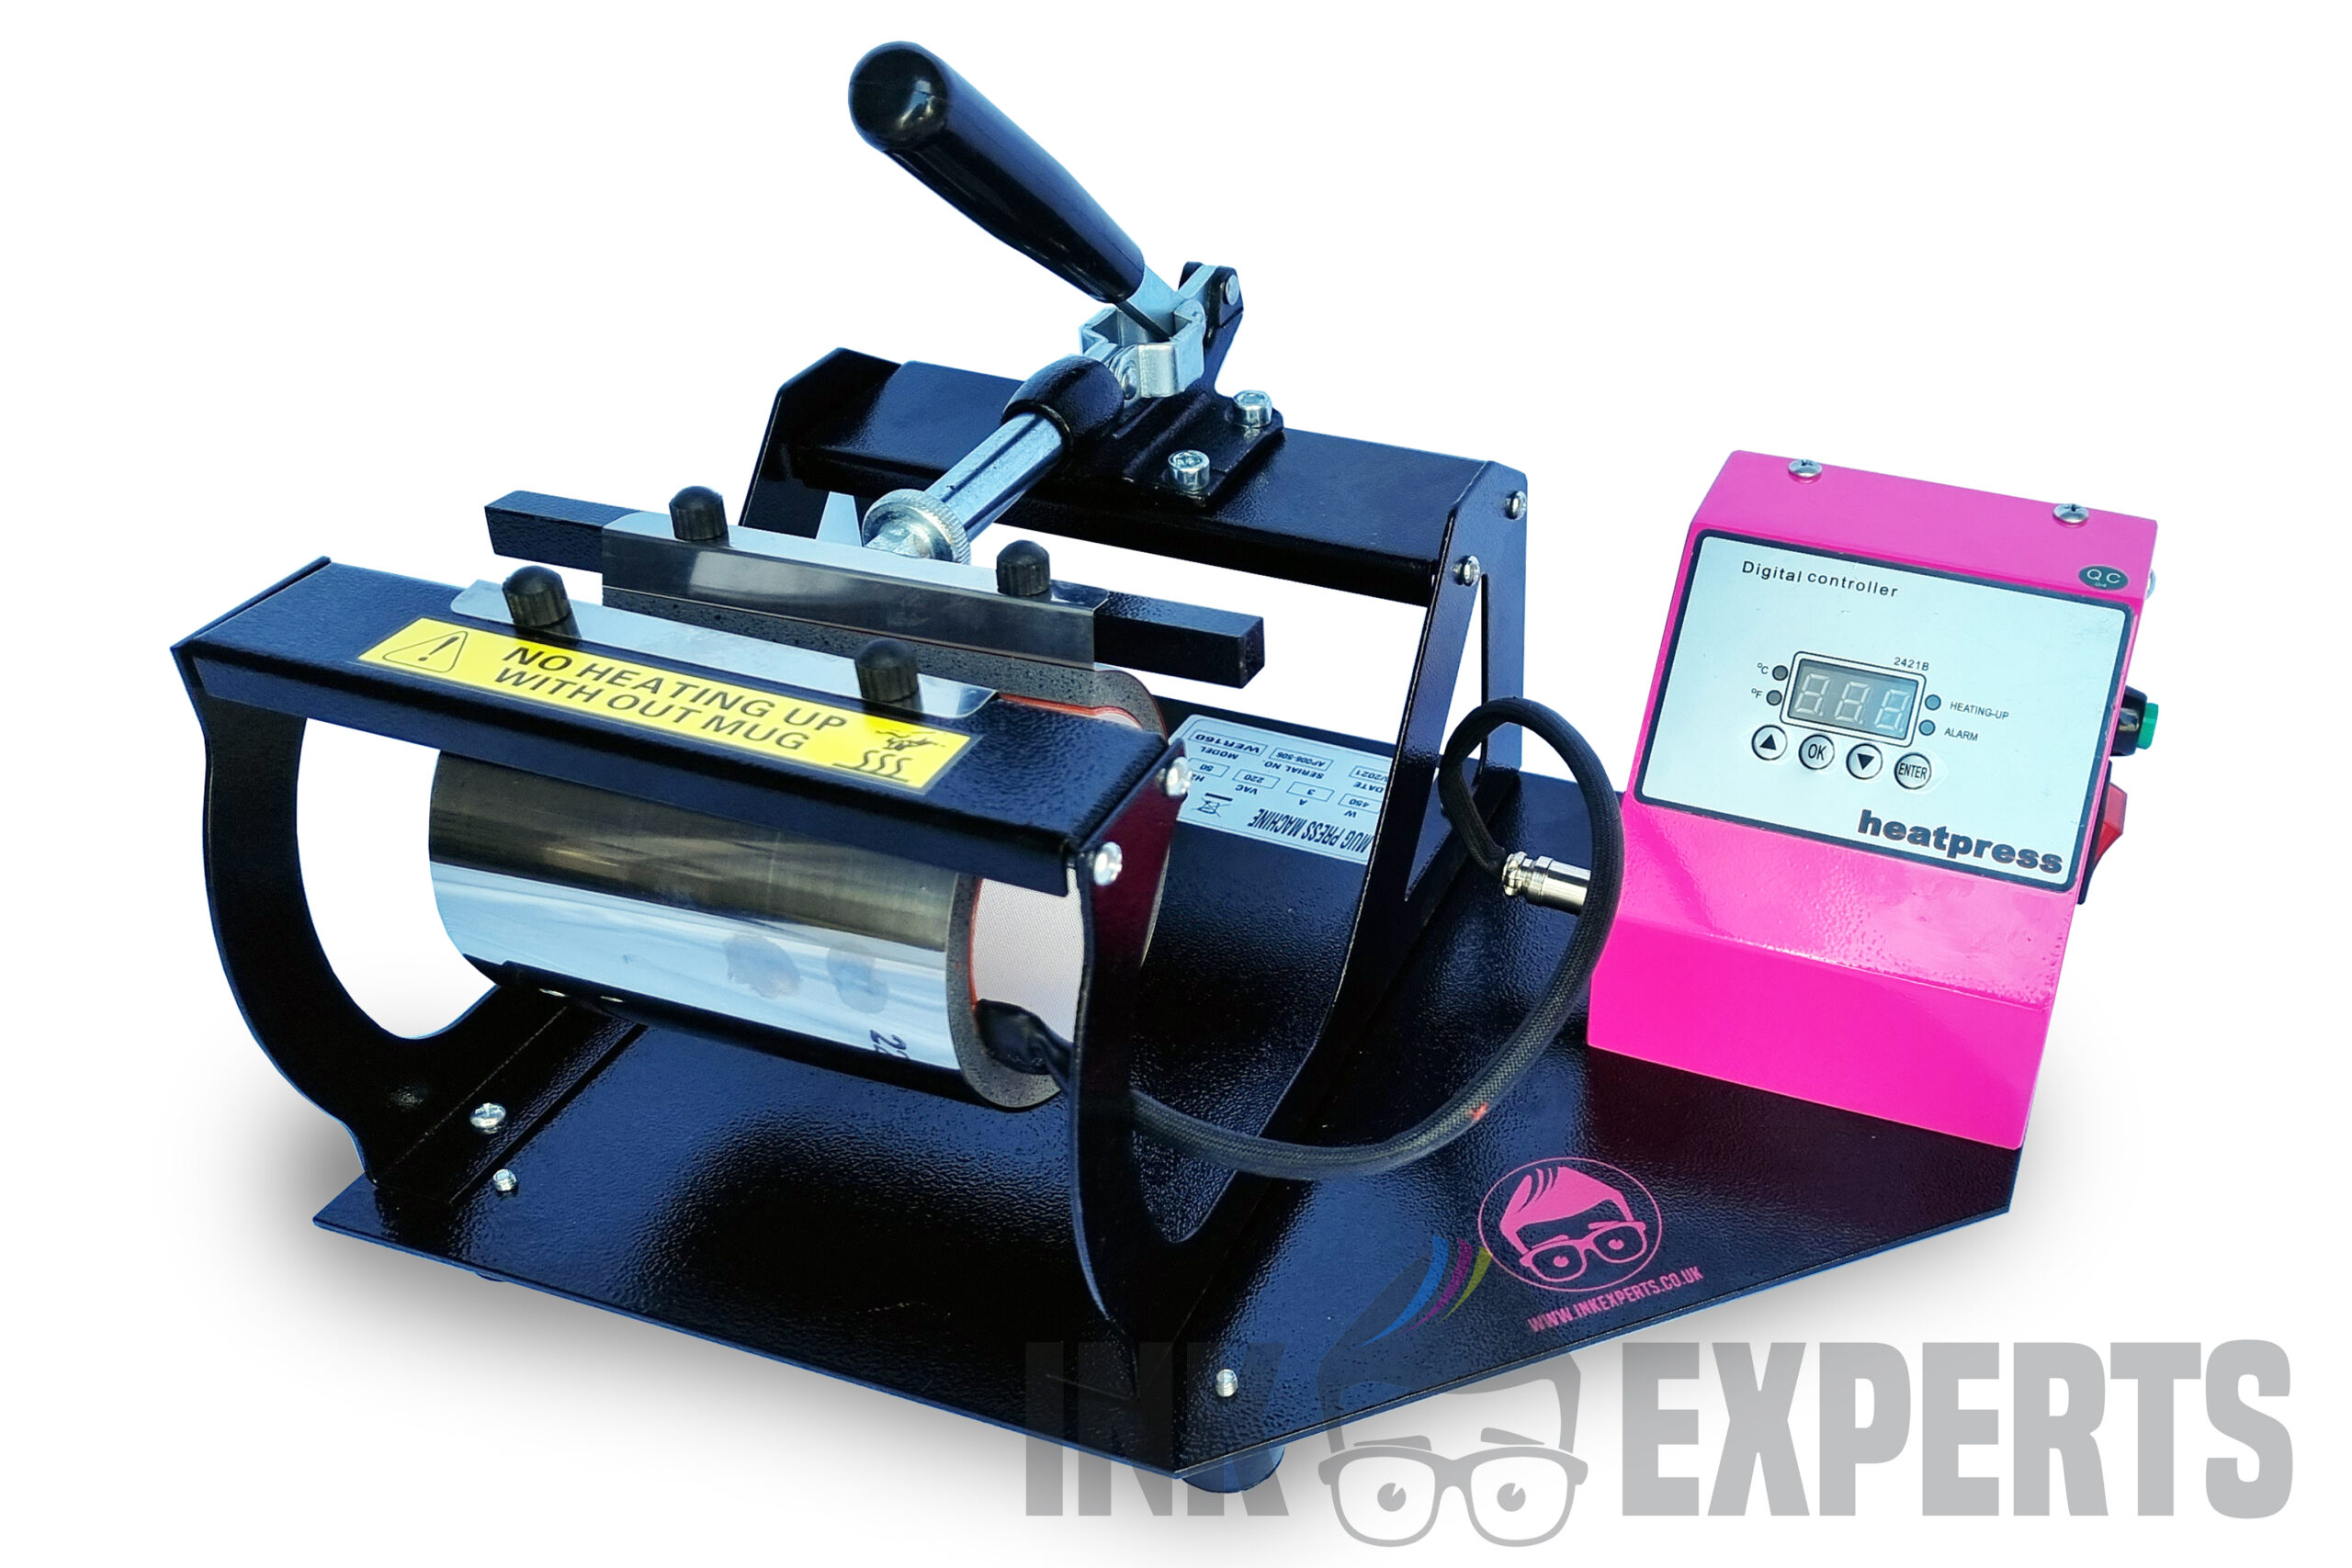 Complete A4 Sublimation Printer & Heat Press Starter Bundle: Epson